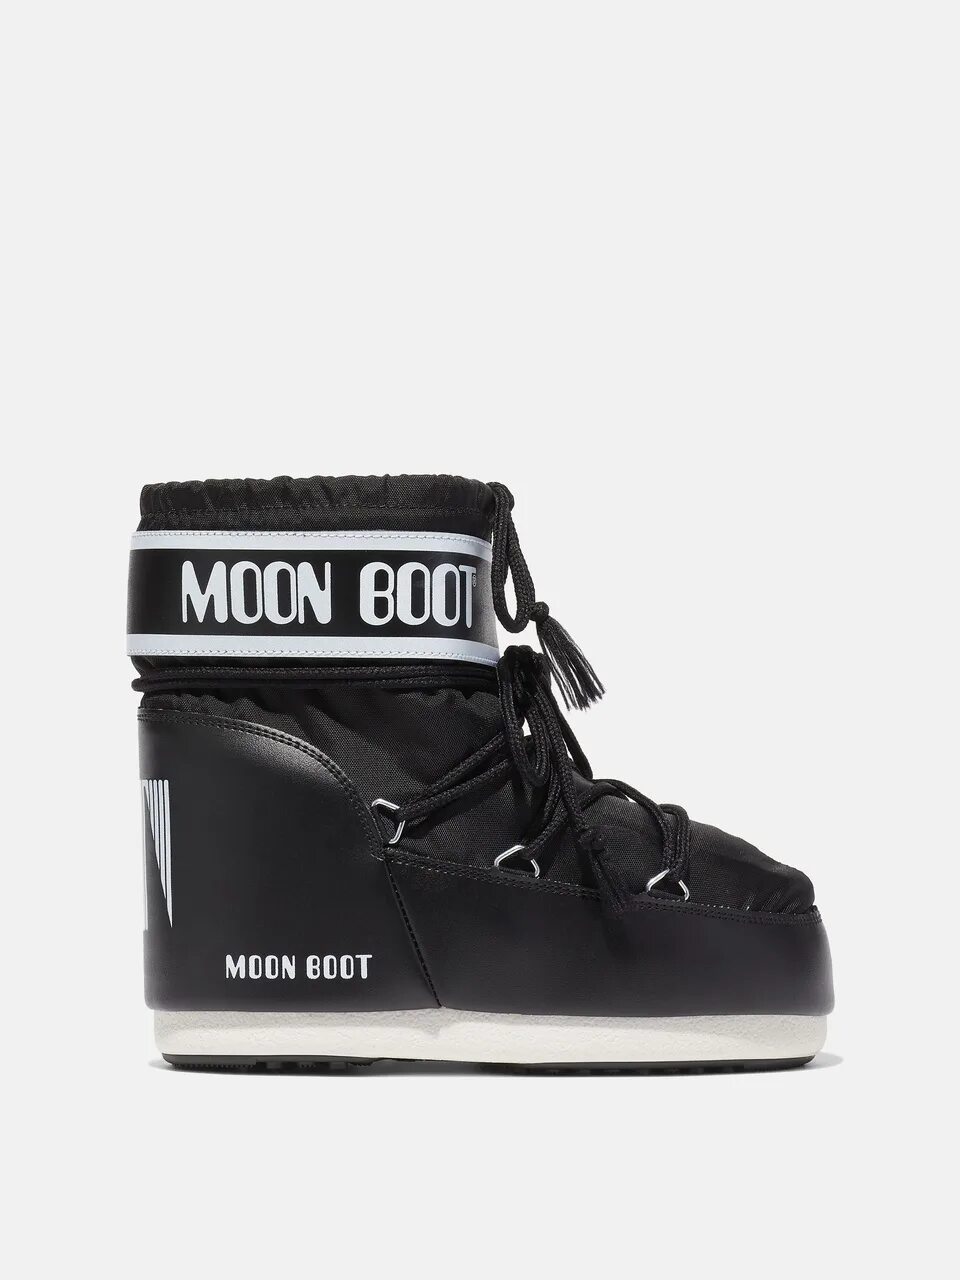 Nike Moon Boot. Мун бут. Moon Boot мужские. Дутики Мун бут. Муны обувь